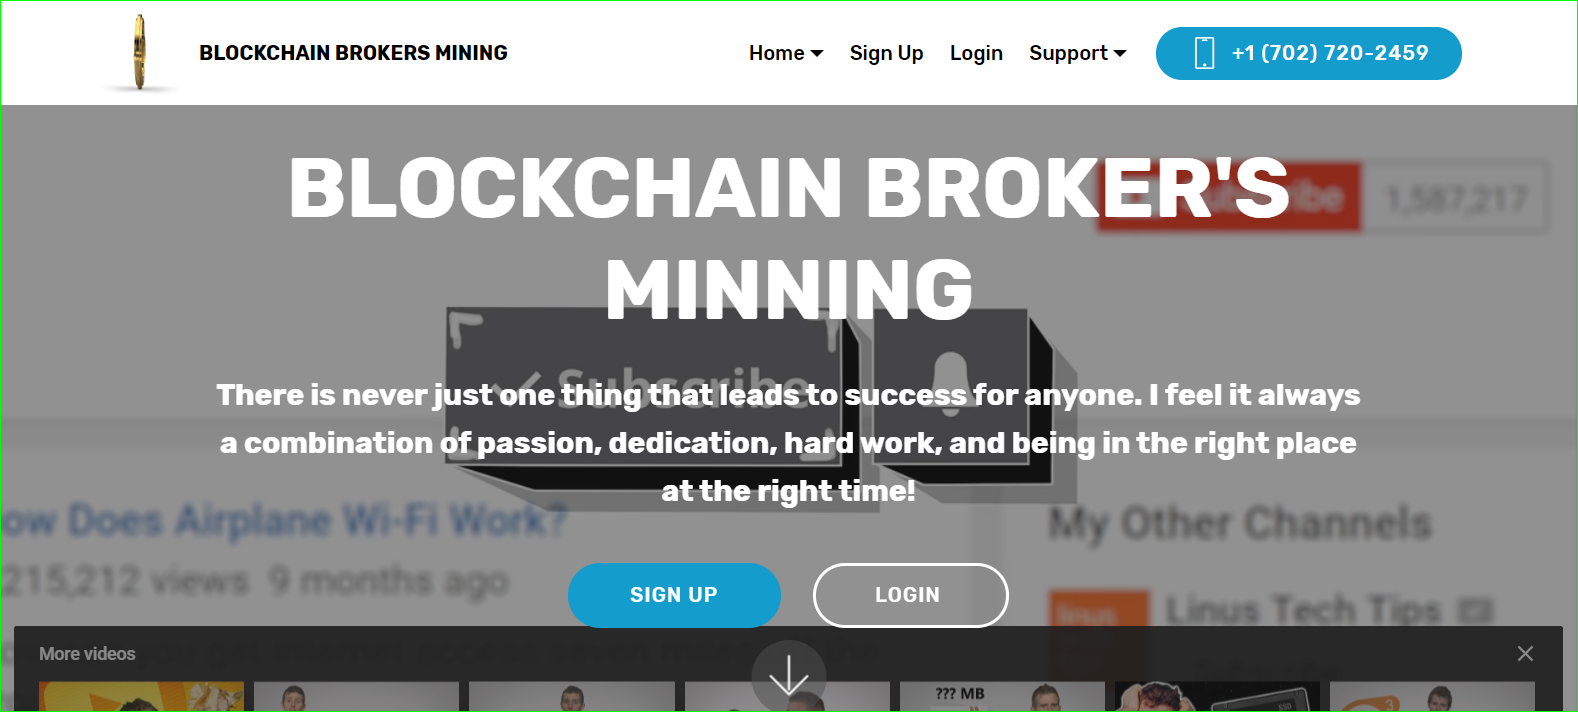 Blockchain Broker's Mining Website Home Page